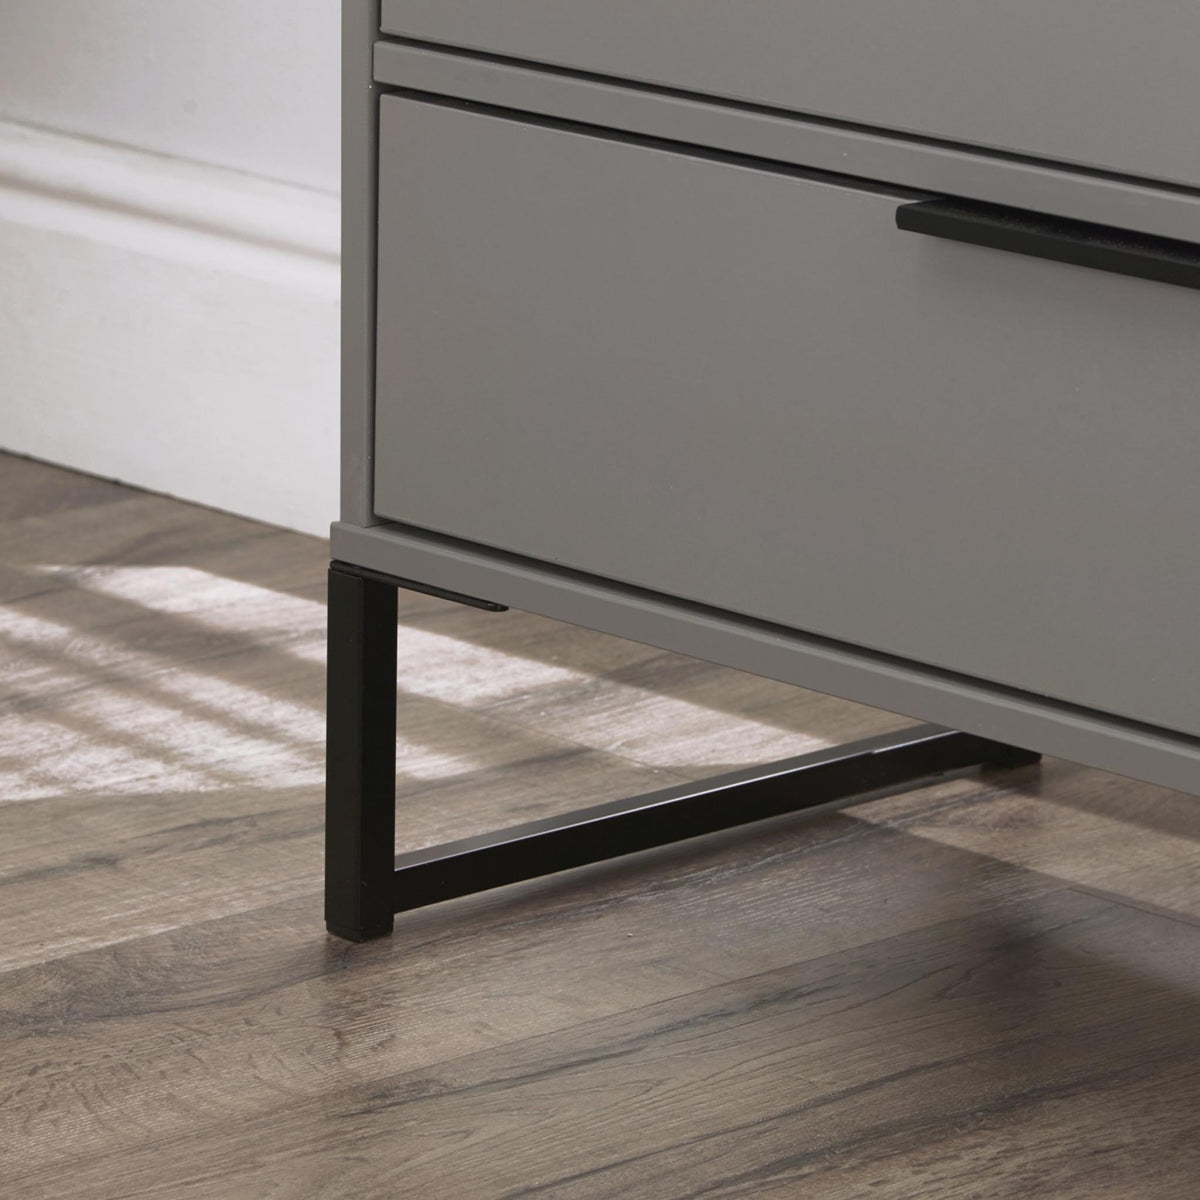 Hudson grey 2 drawer bedside cabinet with black legs from Roseland